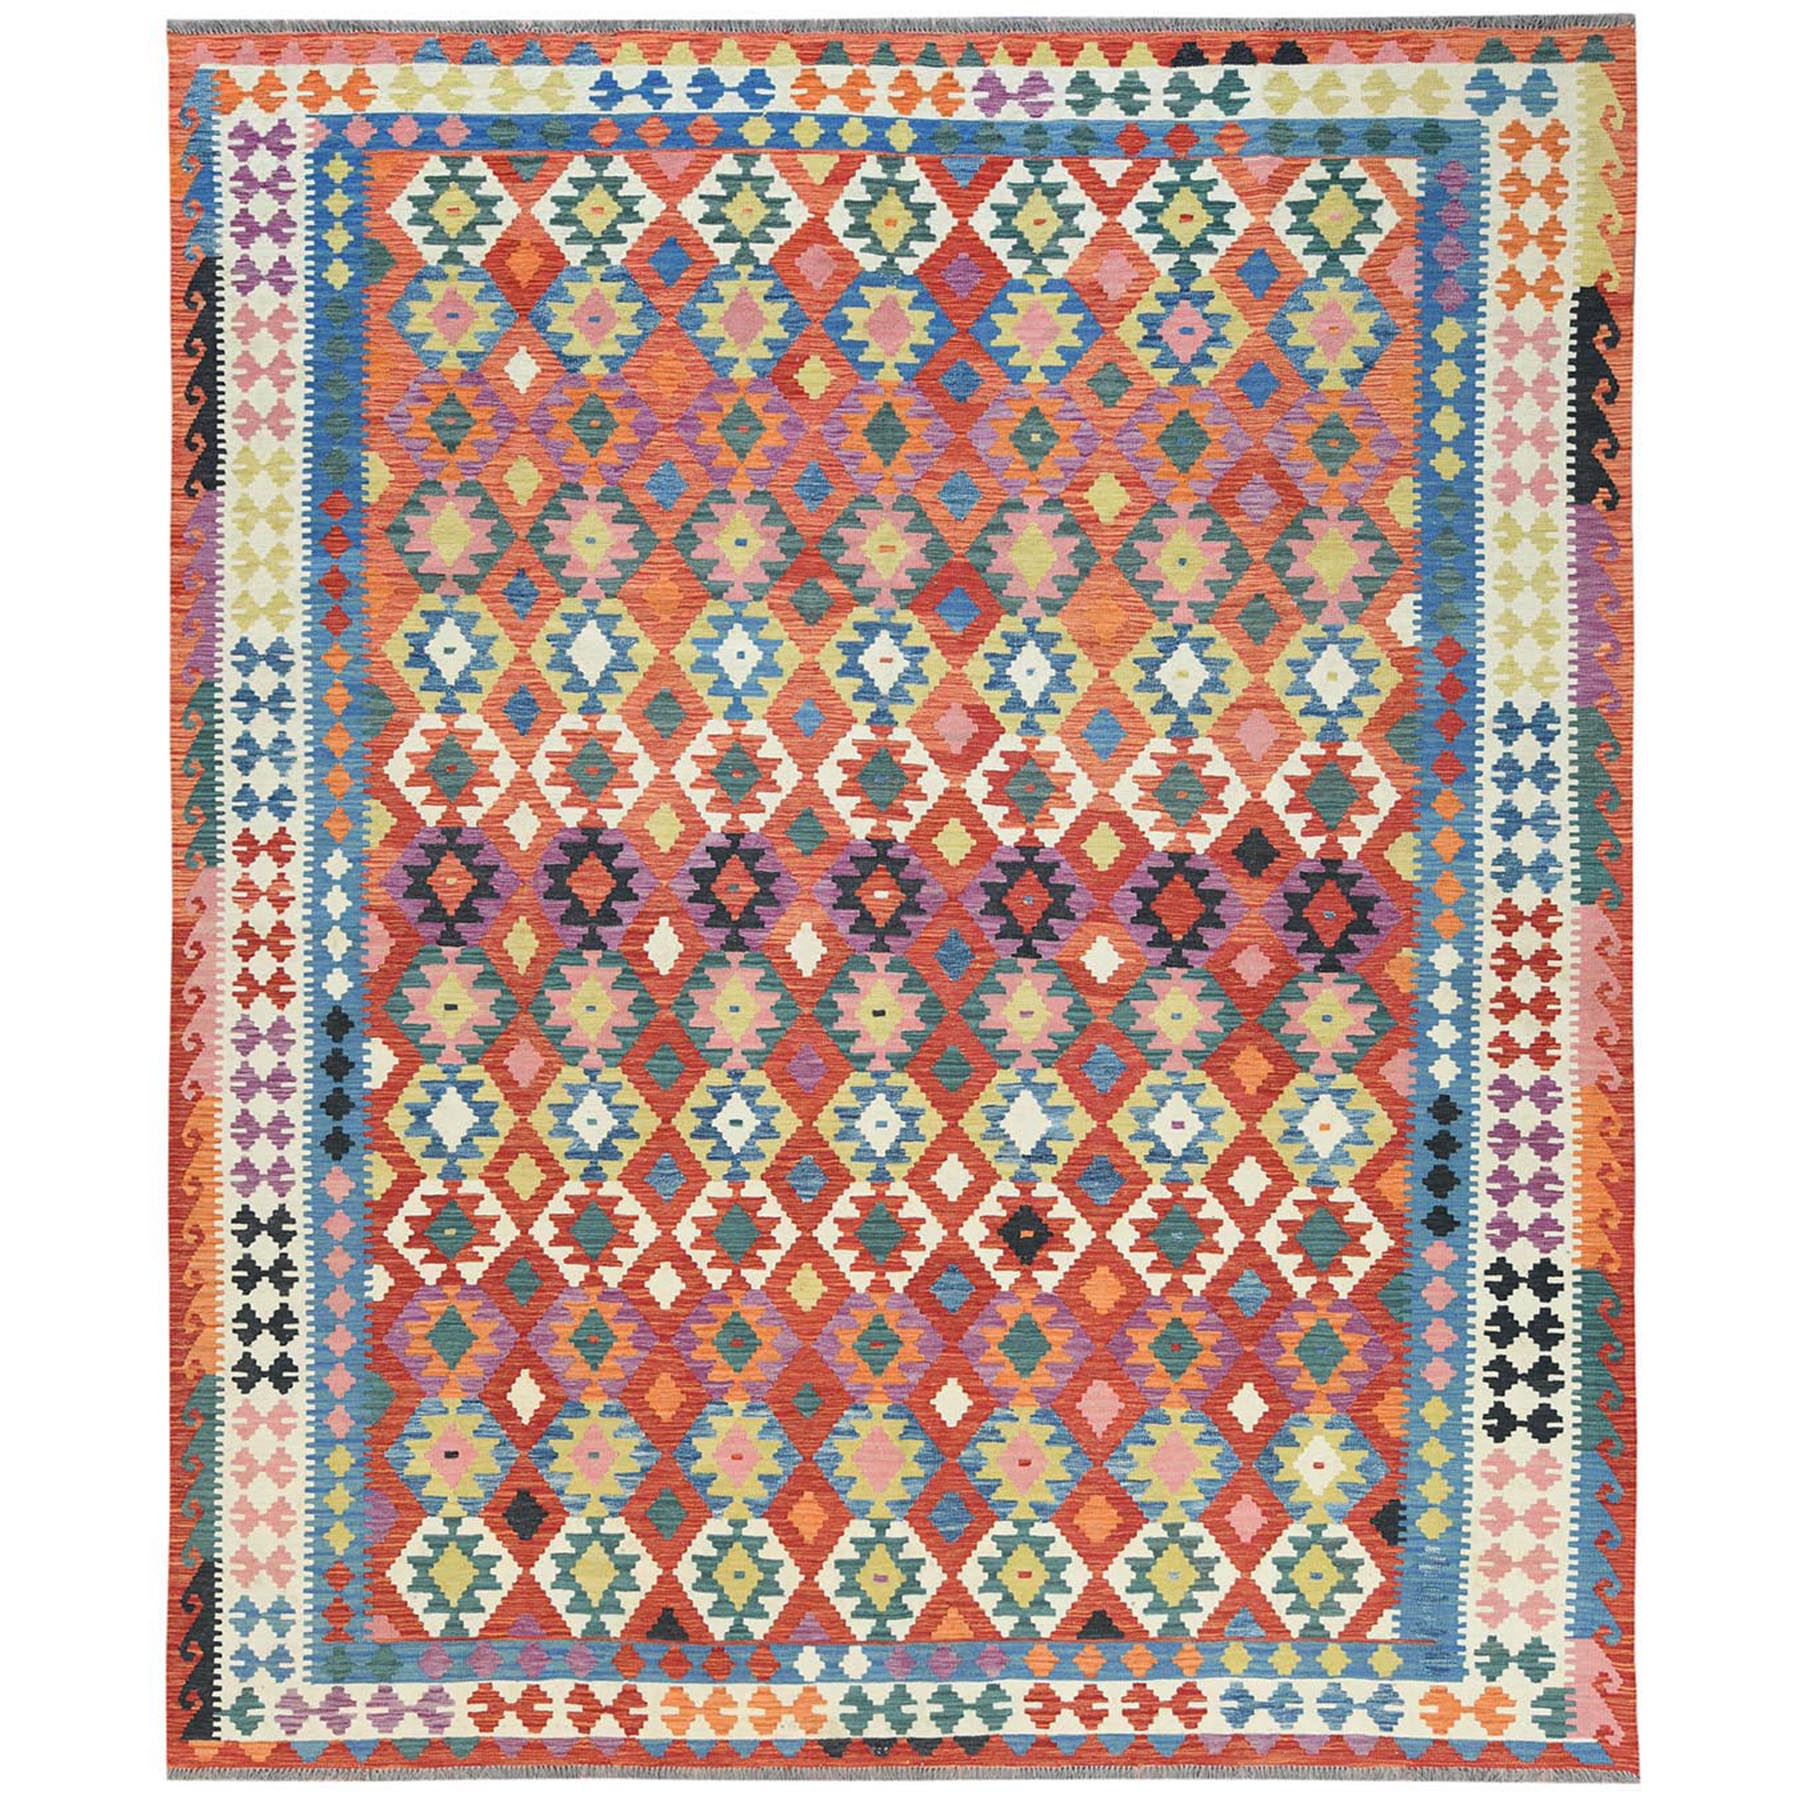 Geometric Tribal Reversible Kilim Oriental Area Rug Hand-woven Wool Carpet 5'x7' 